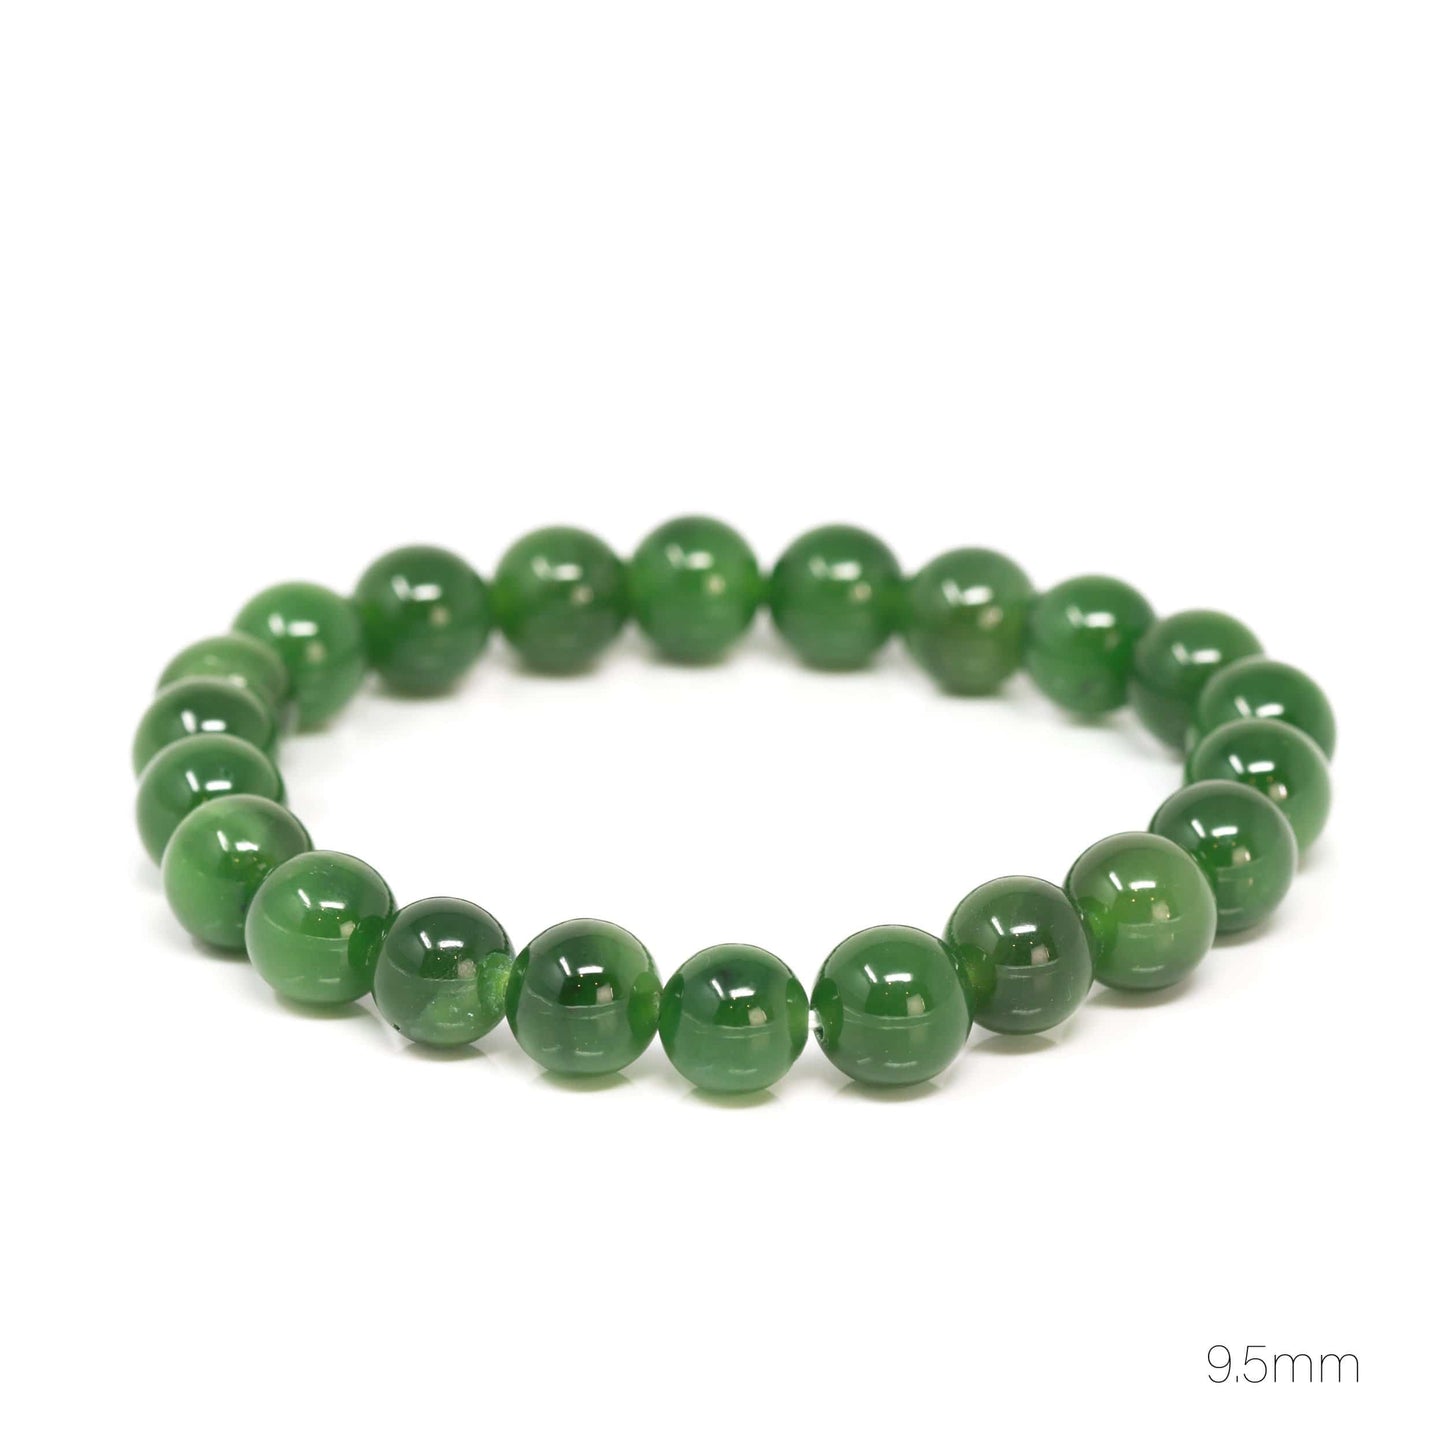 RealJade "Classic Bangle" Genuine Burmese High Quality Apple Green Jadeite Jade Bangle Bracelet (53.4mm) #542